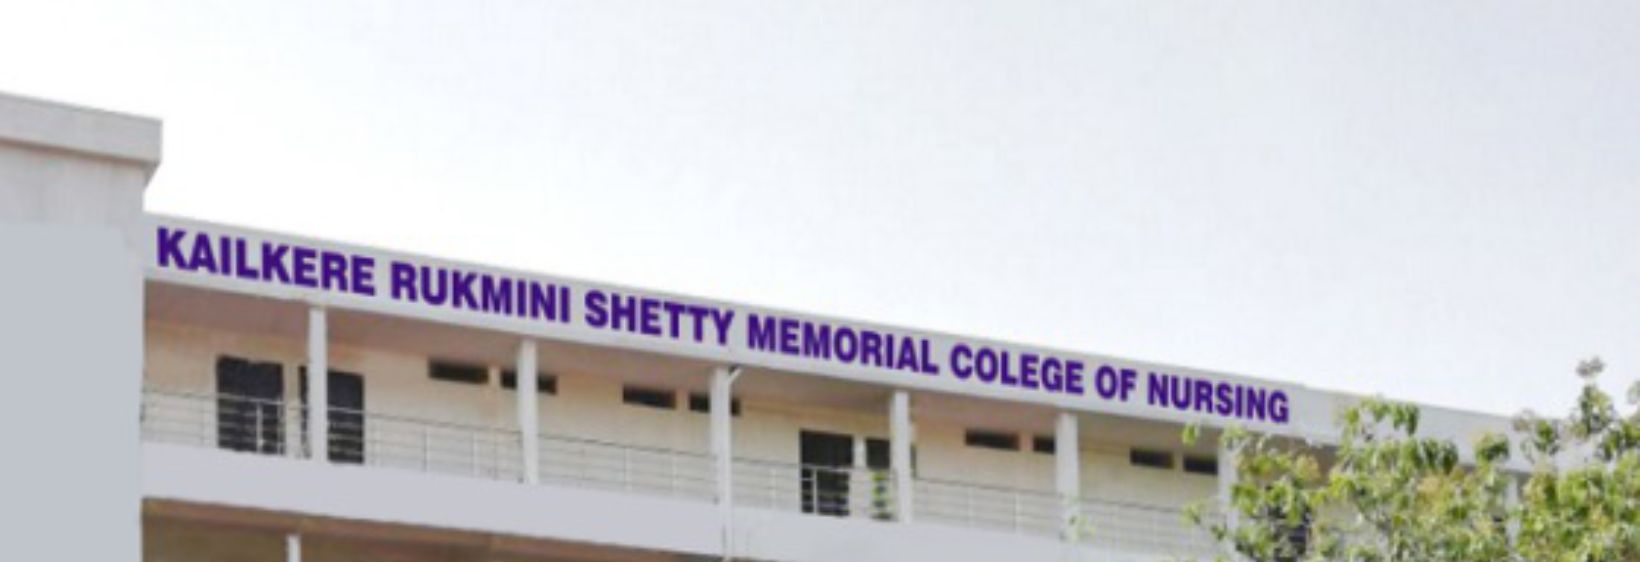 Kailkere Rukmini Shetty Memorial College Of Nursing - Mangalore, Dakshina Kannada